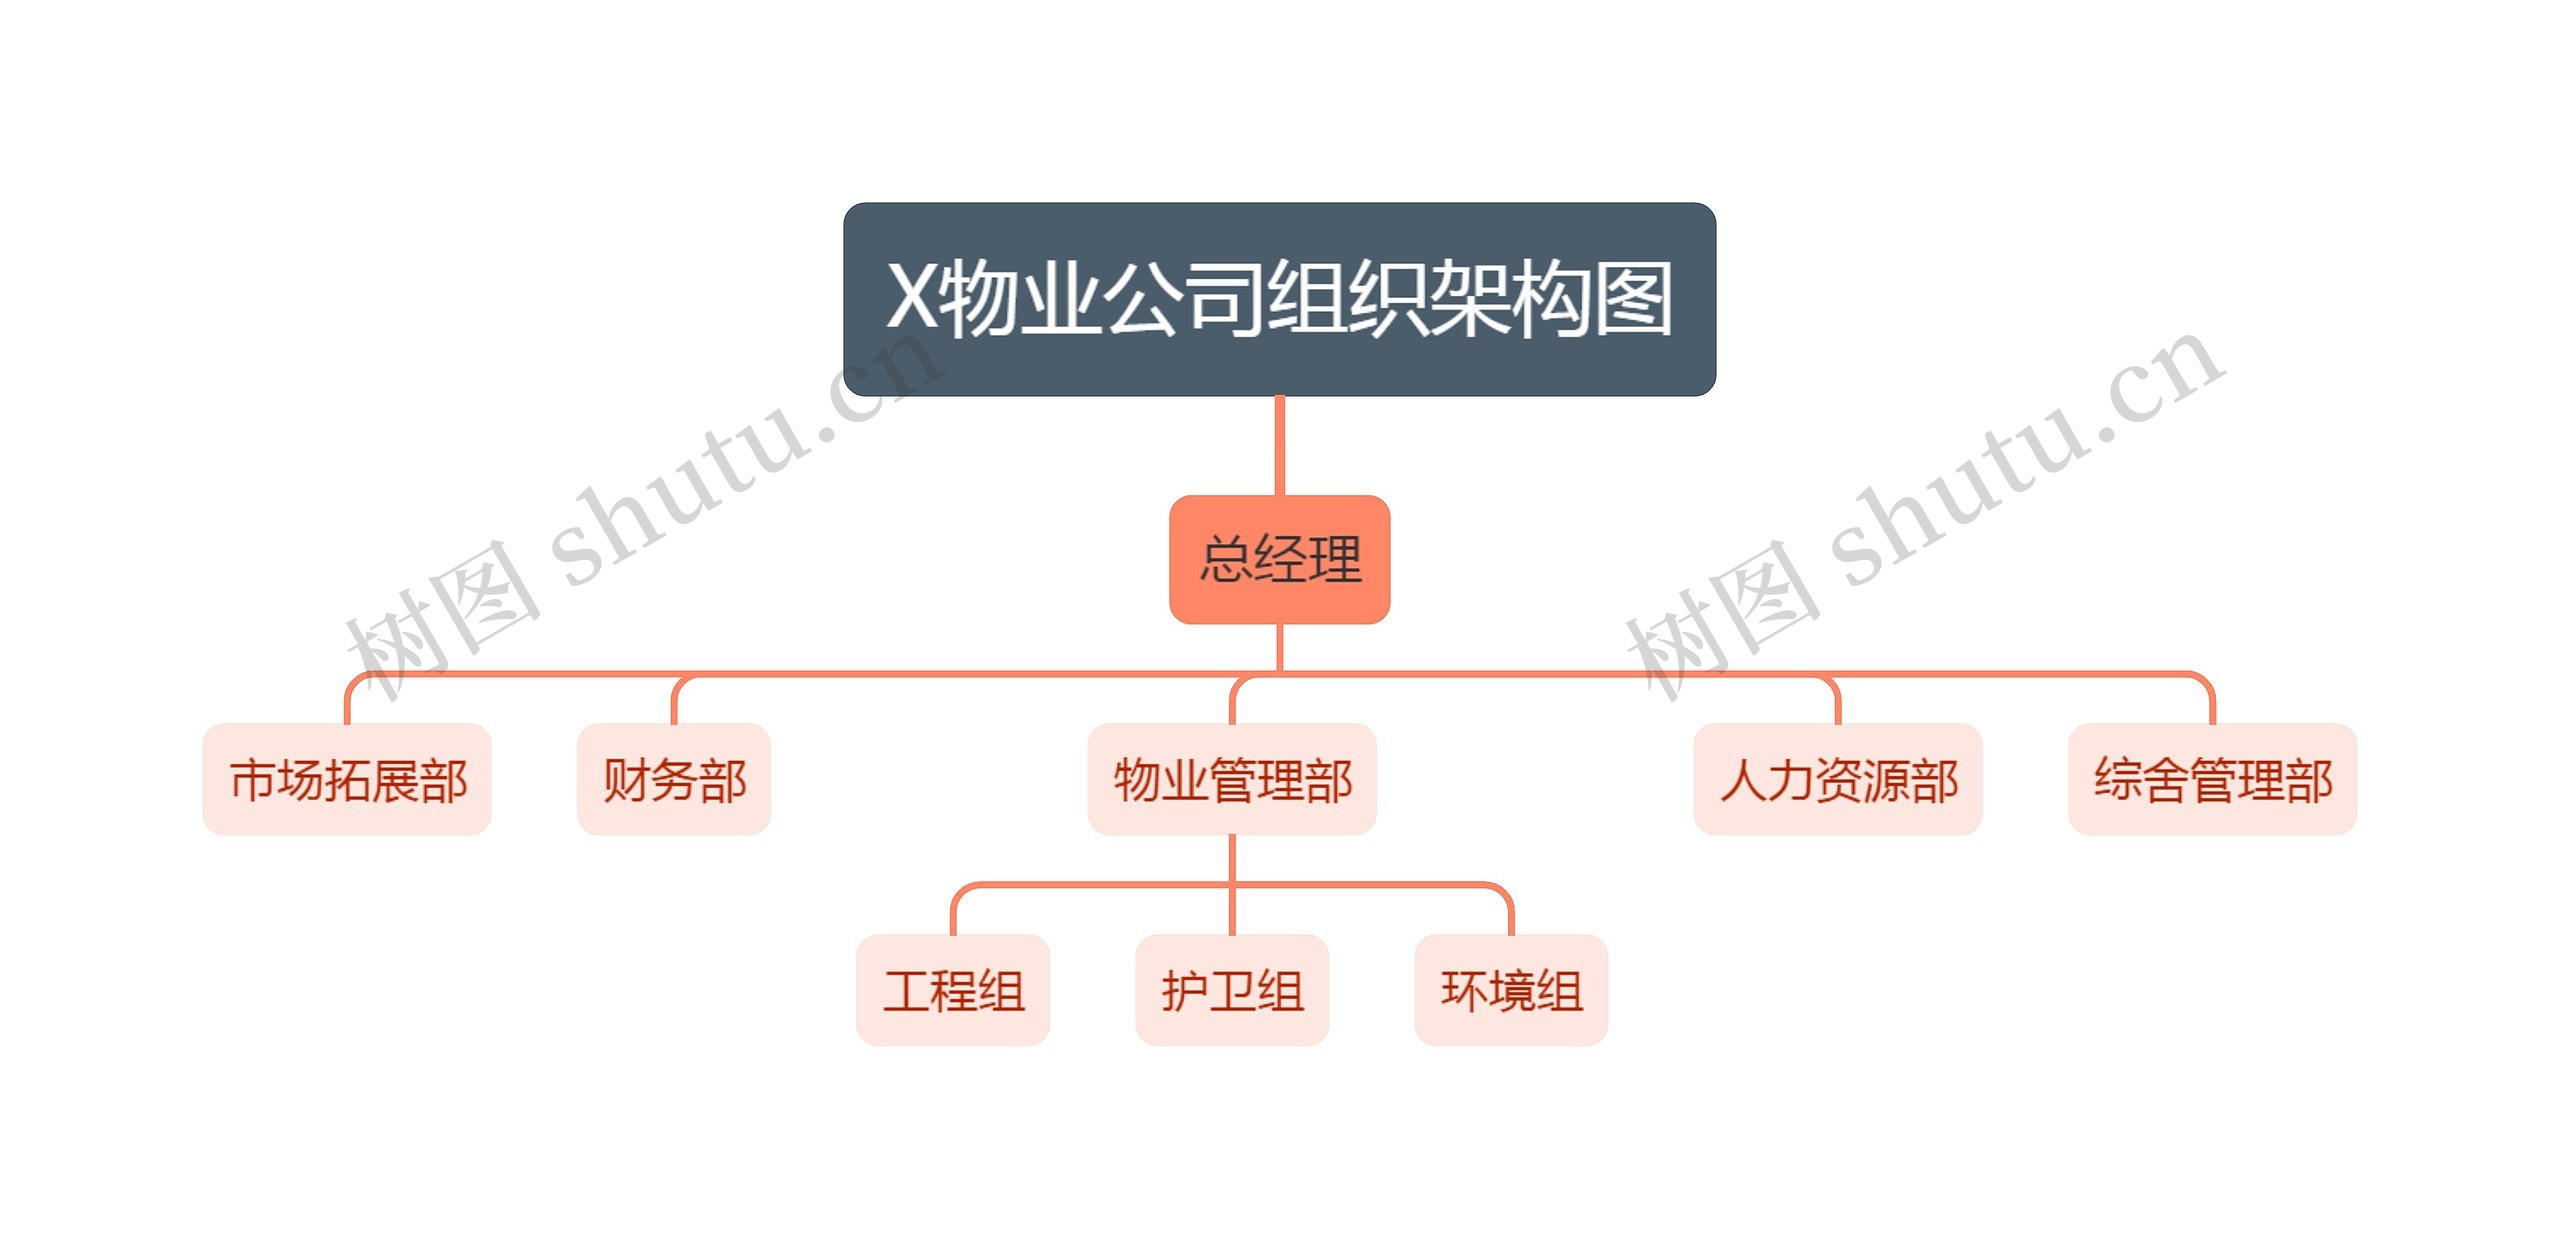 X物业公司组织架构图